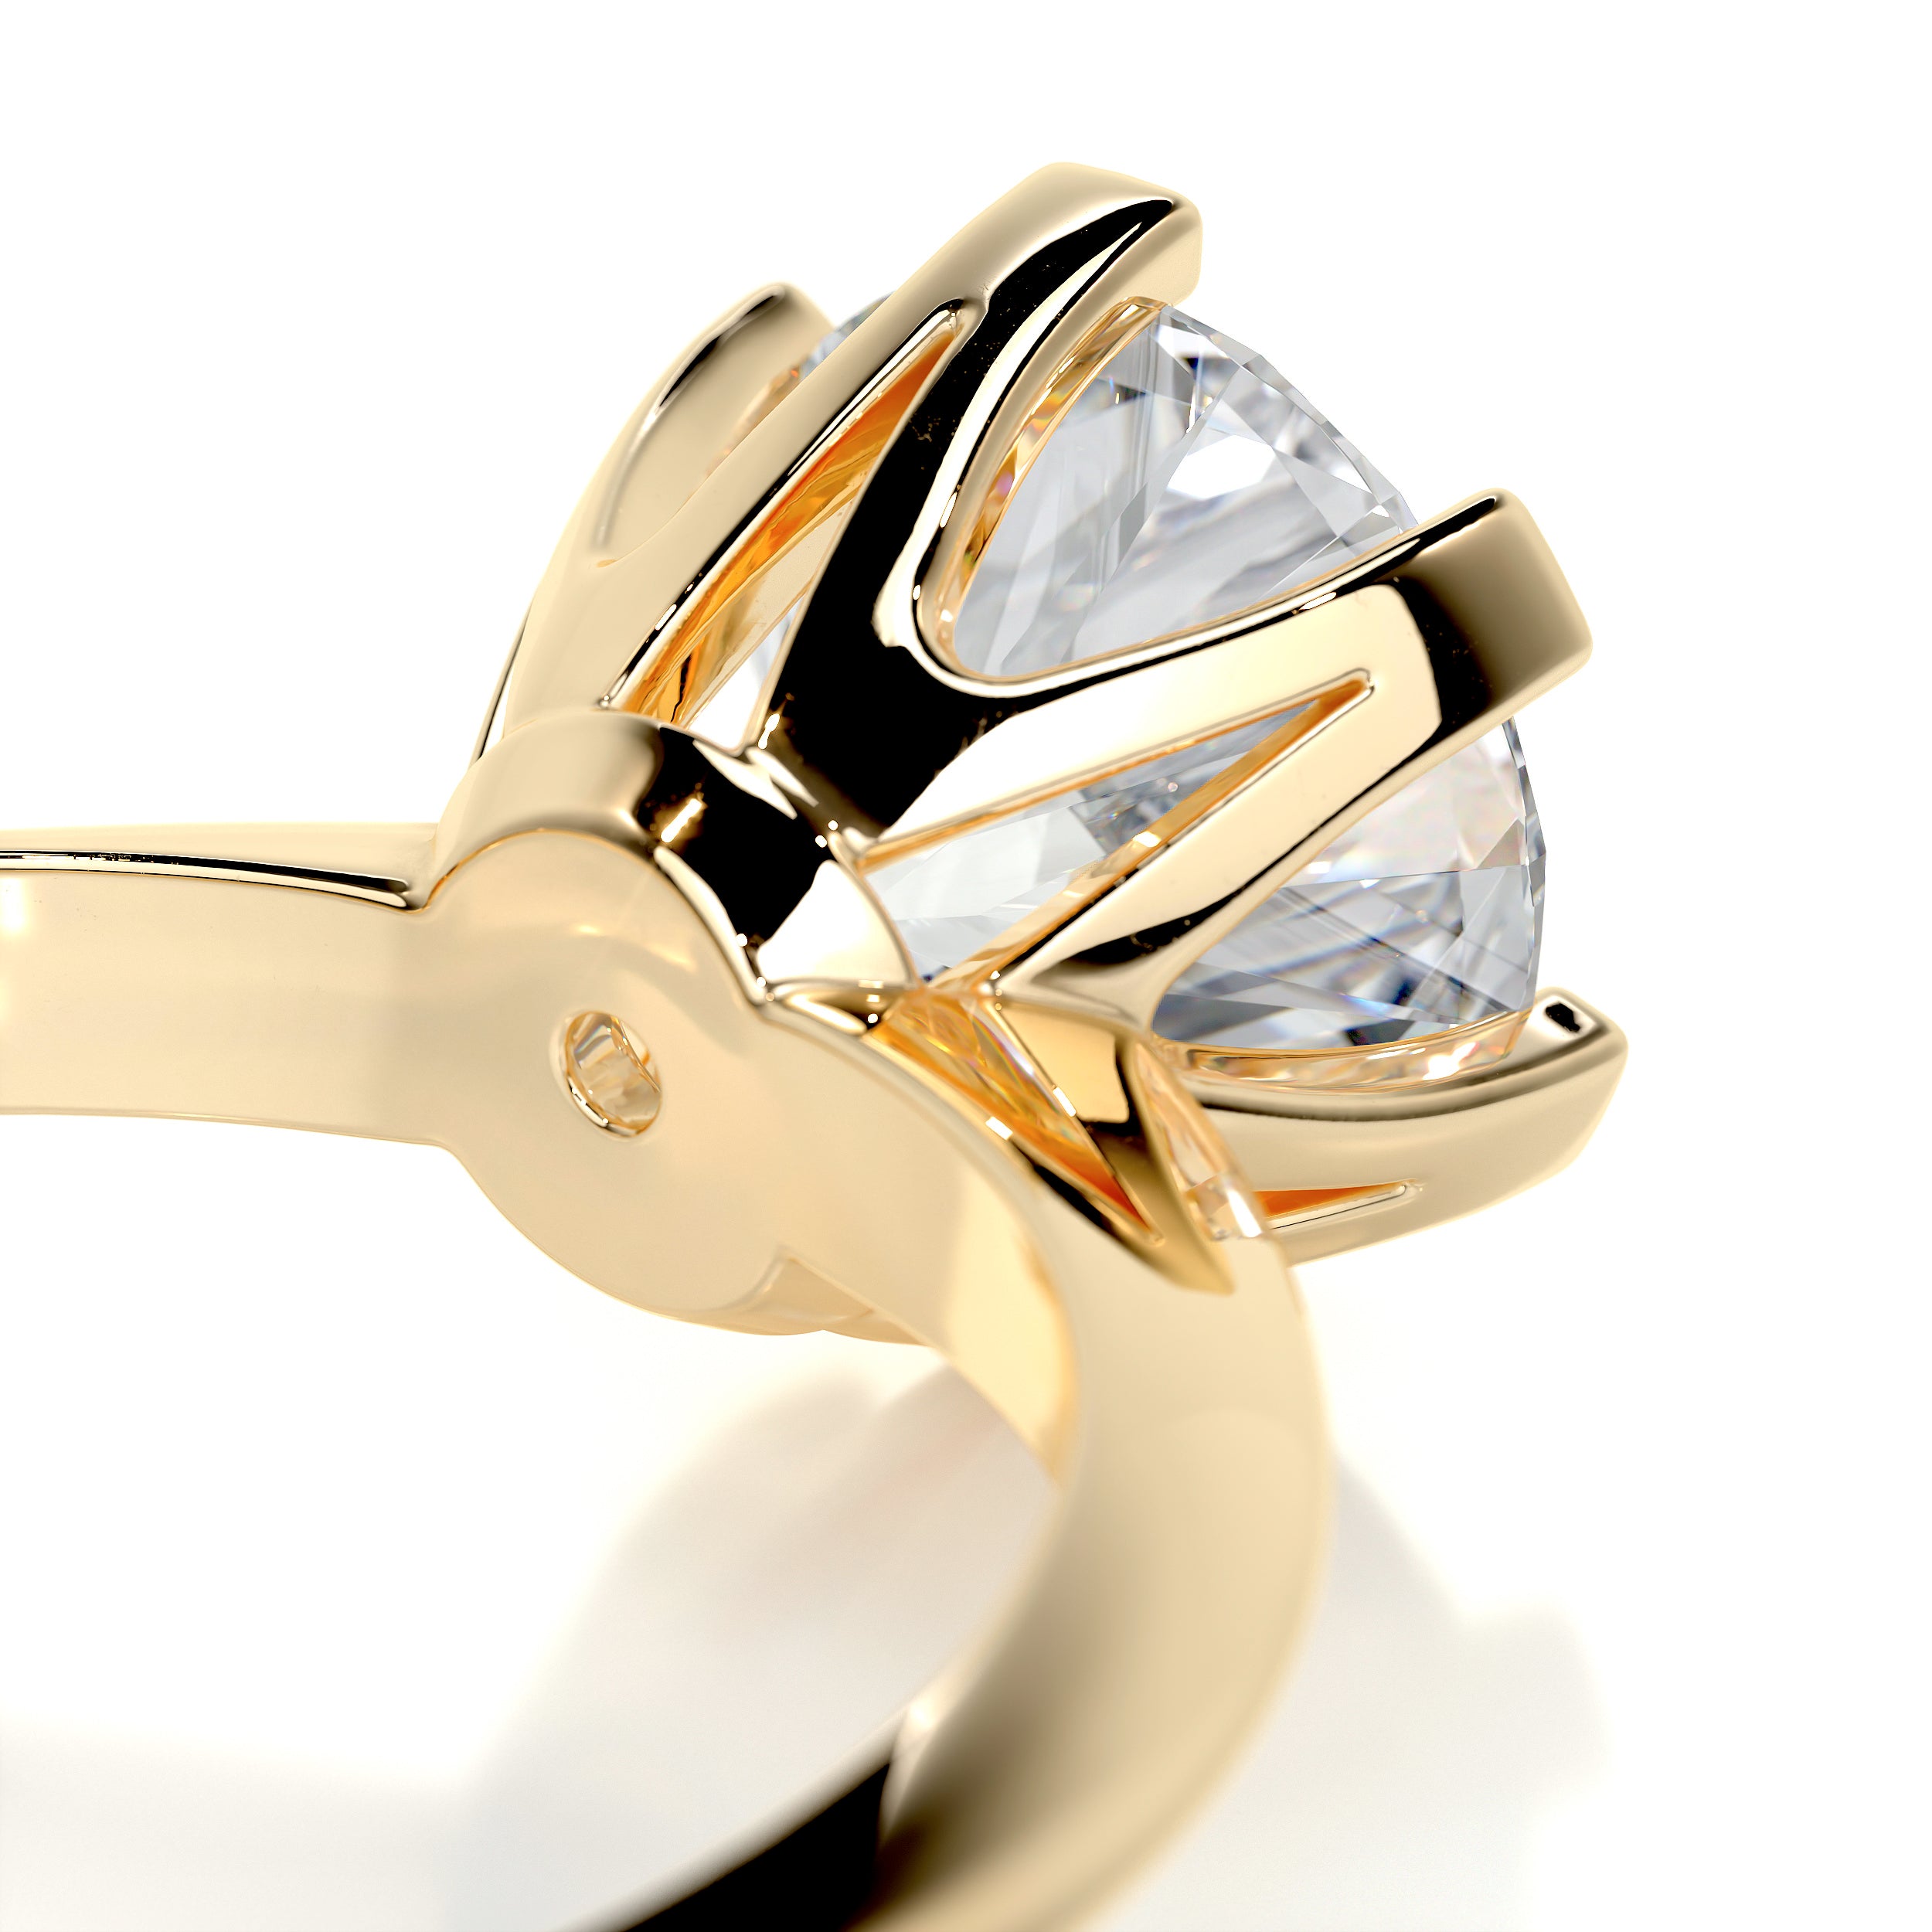 Alexis Diamond Engagement Ring -18K Yellow Gold